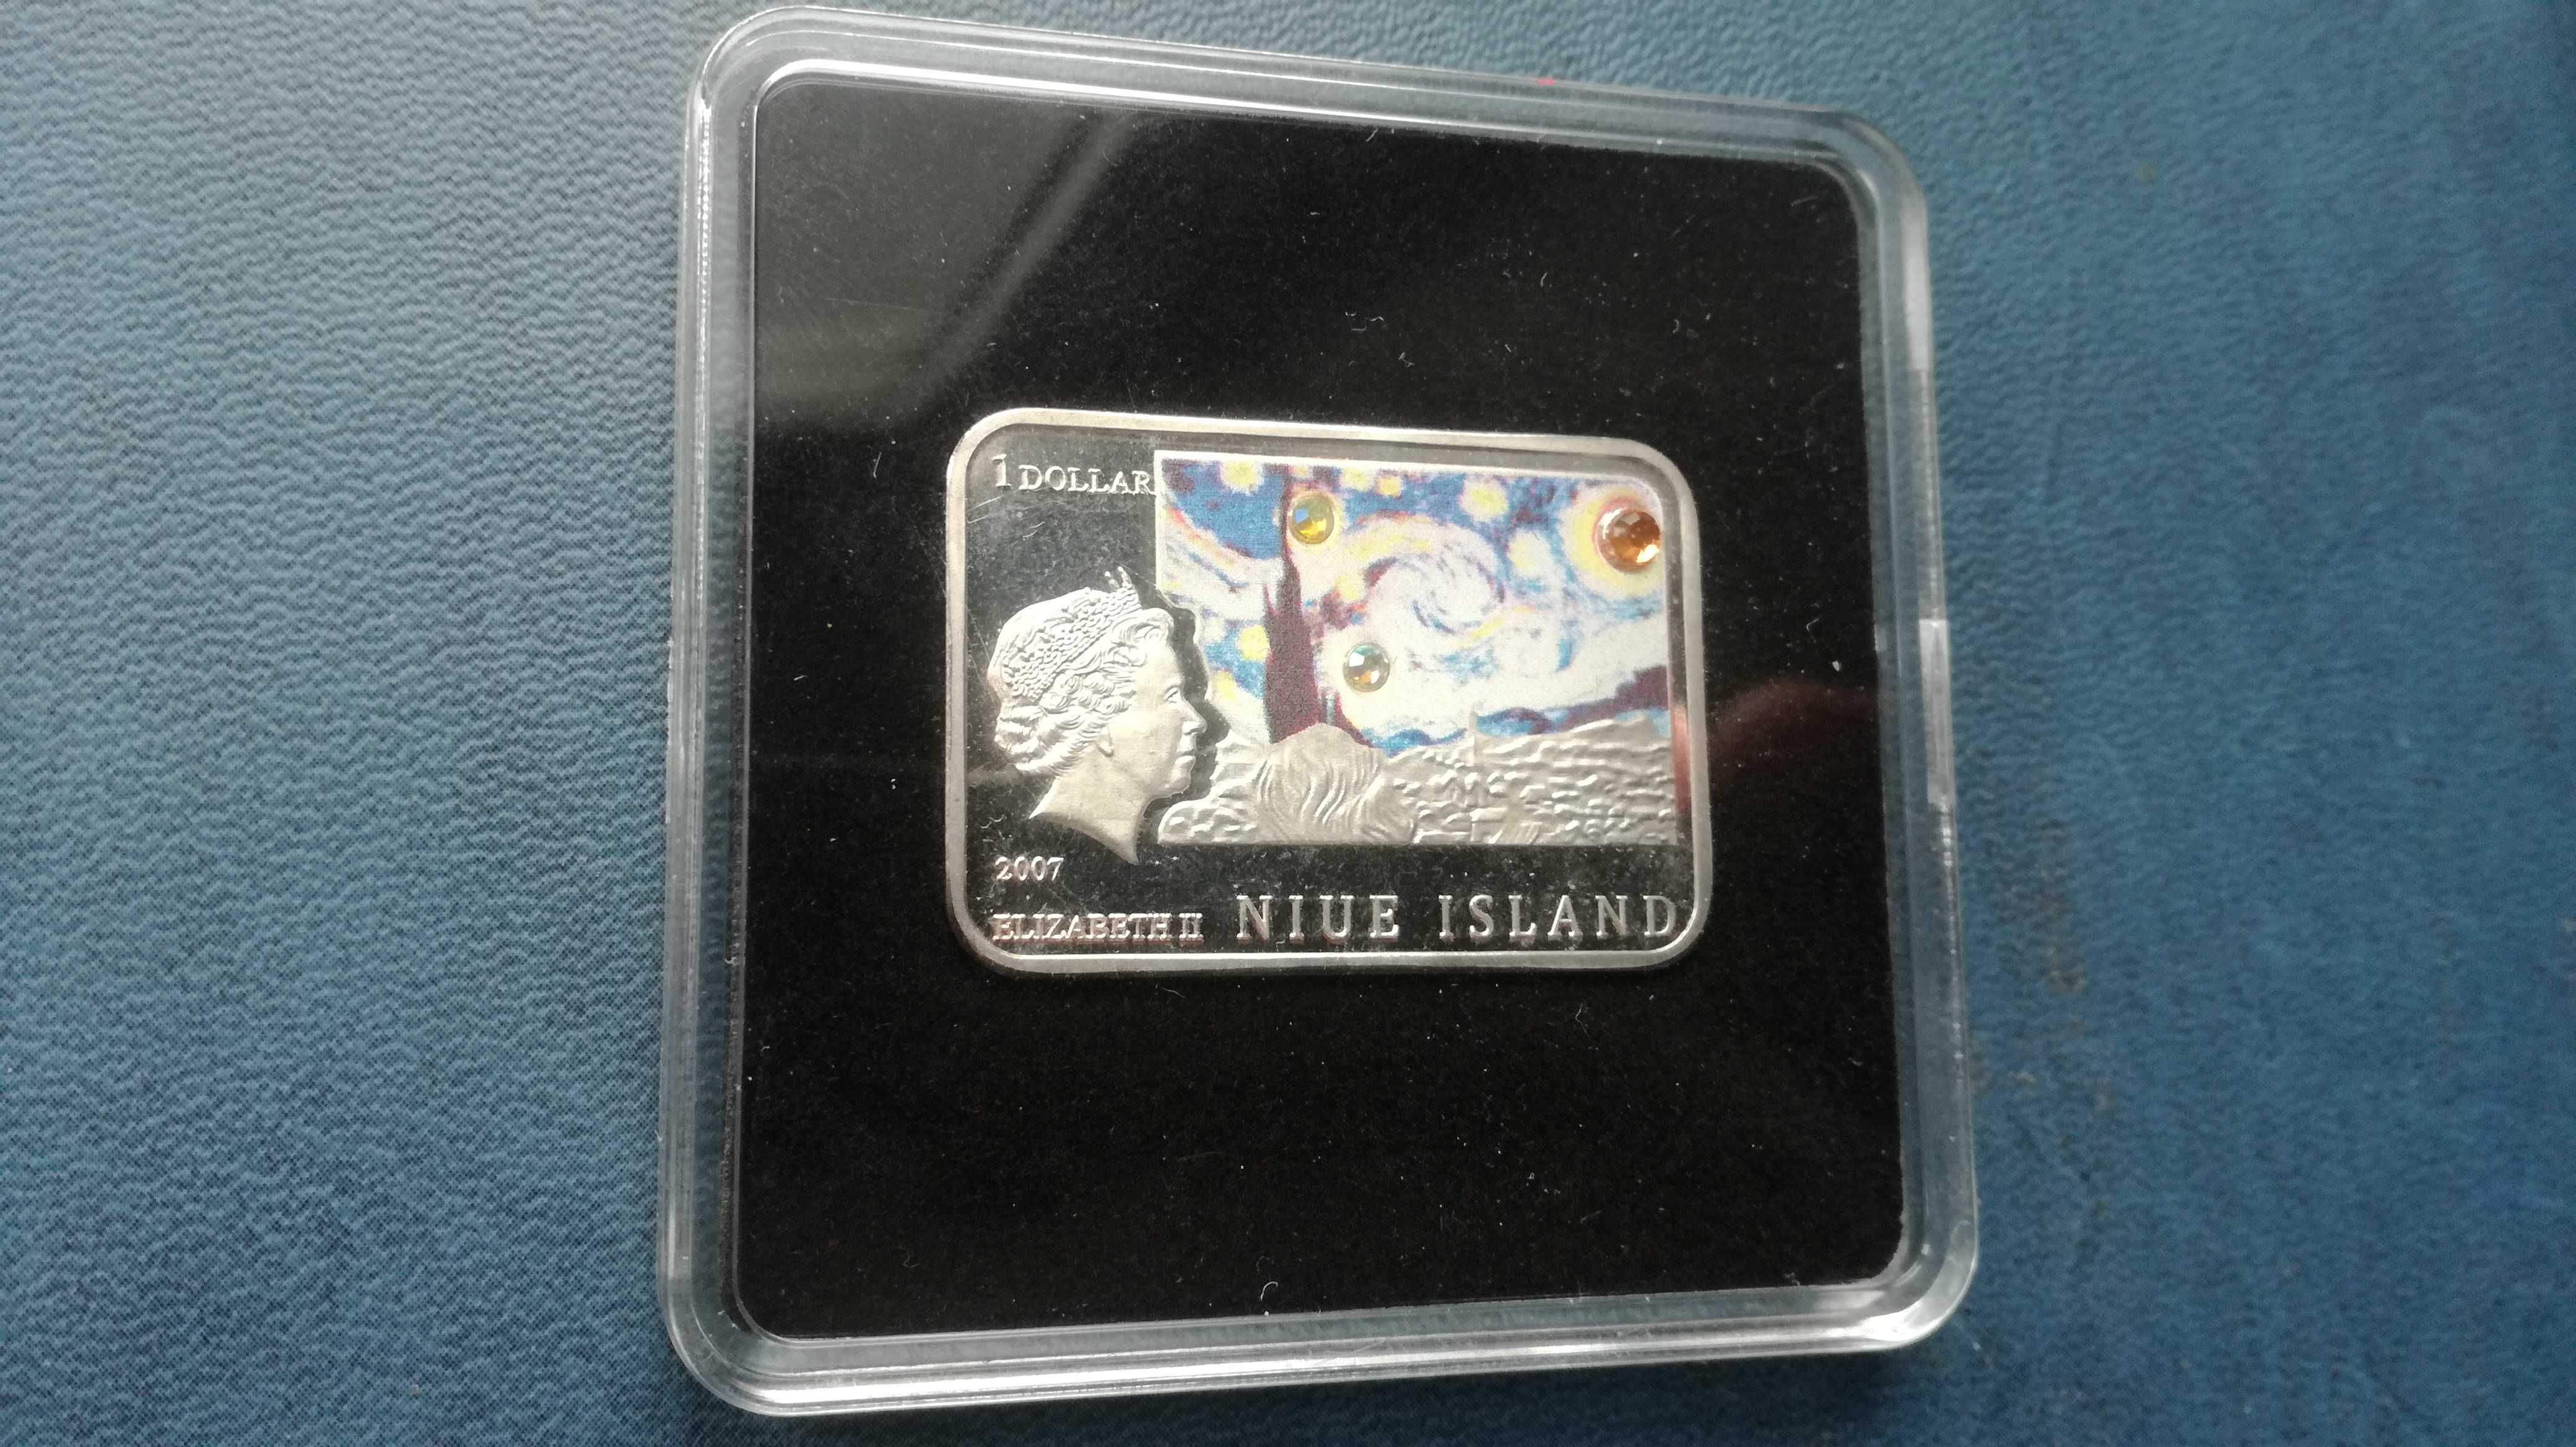 Niue Island 1 dolar 2007 - replika